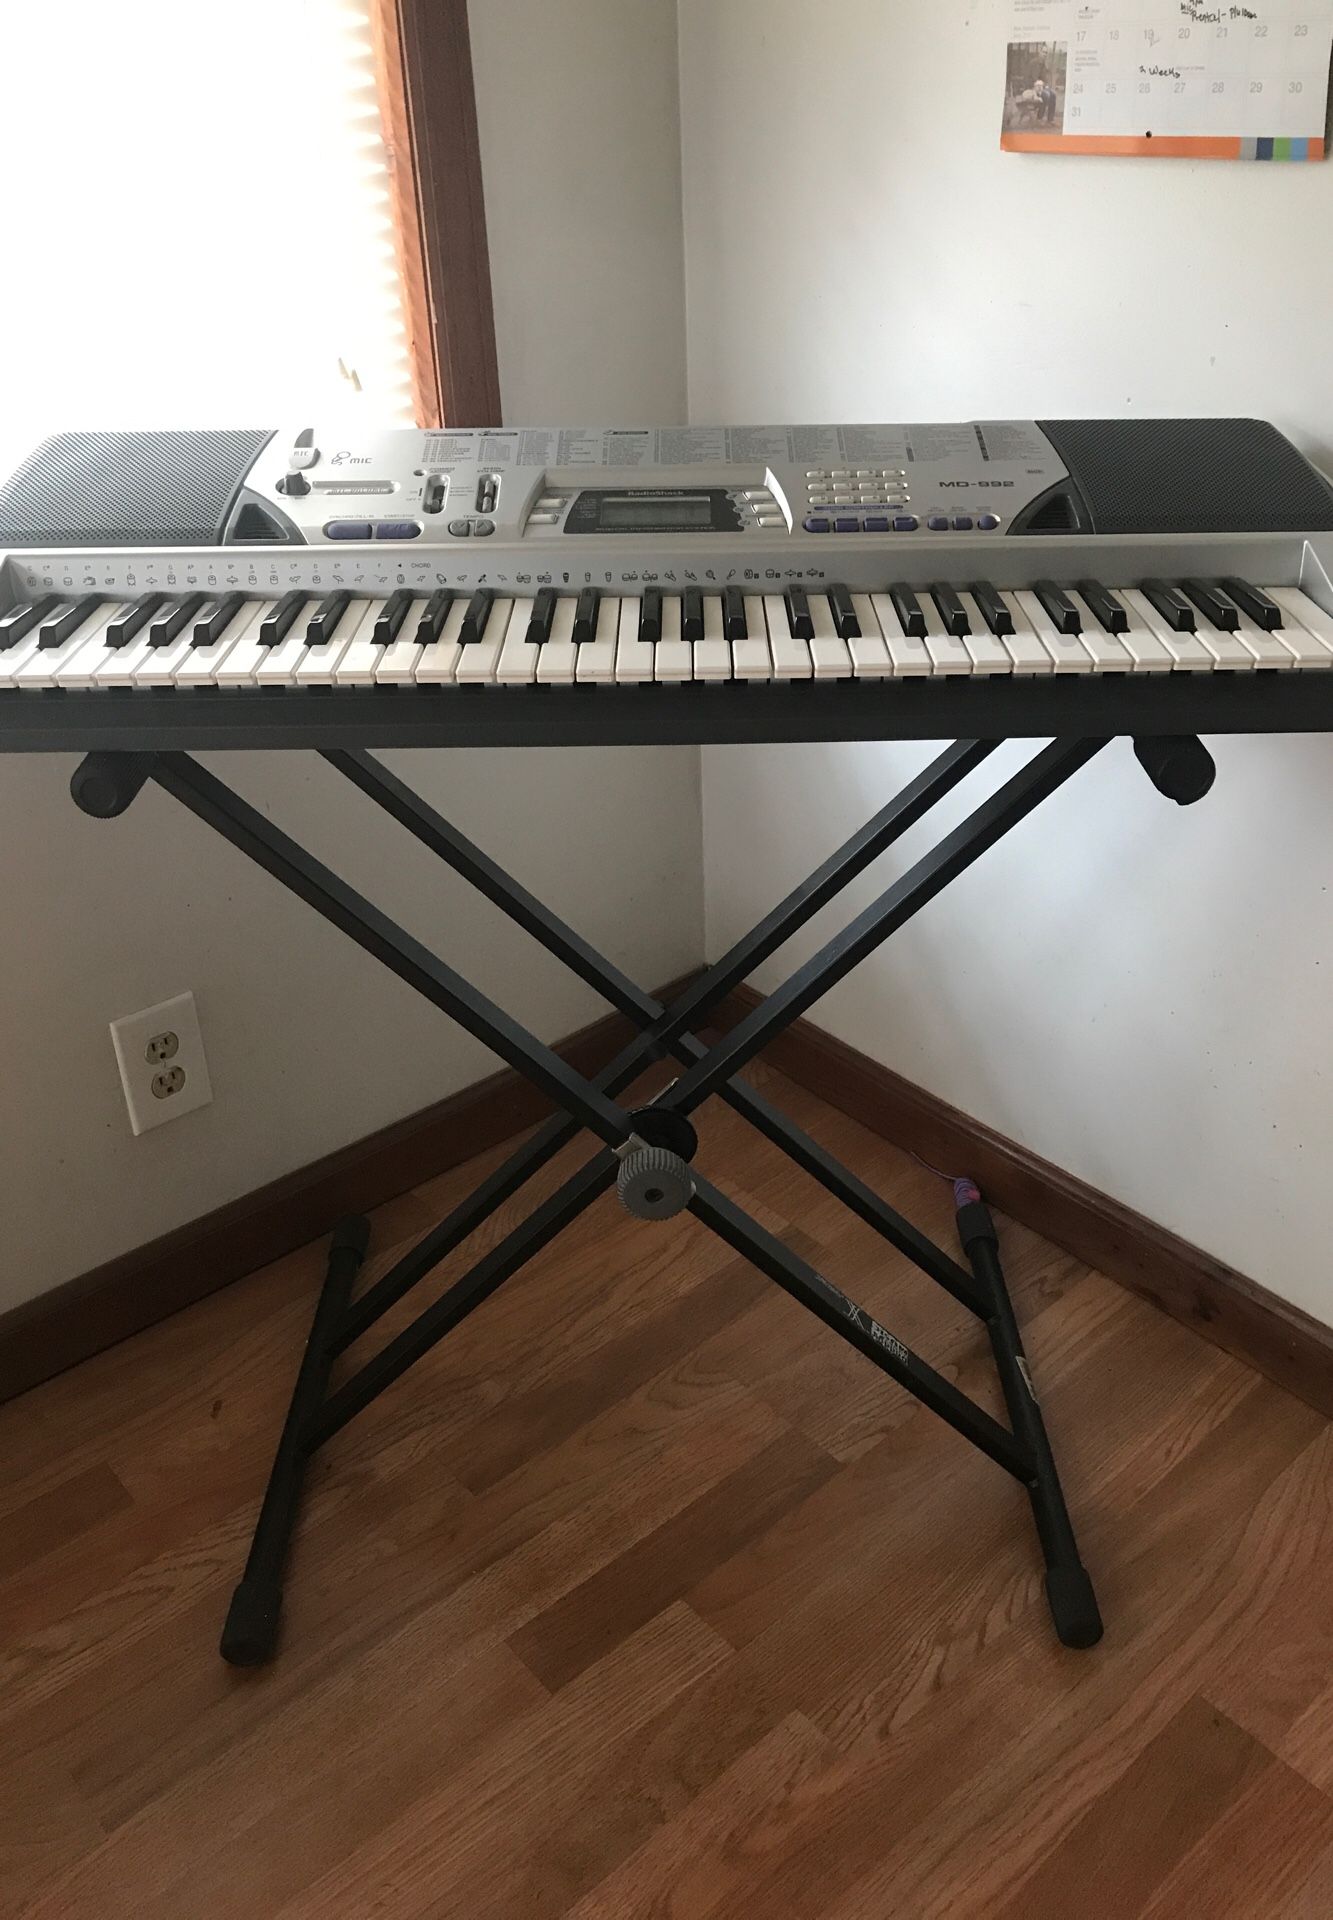 Radioshack keyboard MD-992 w/ stand, seat and music sheet stand